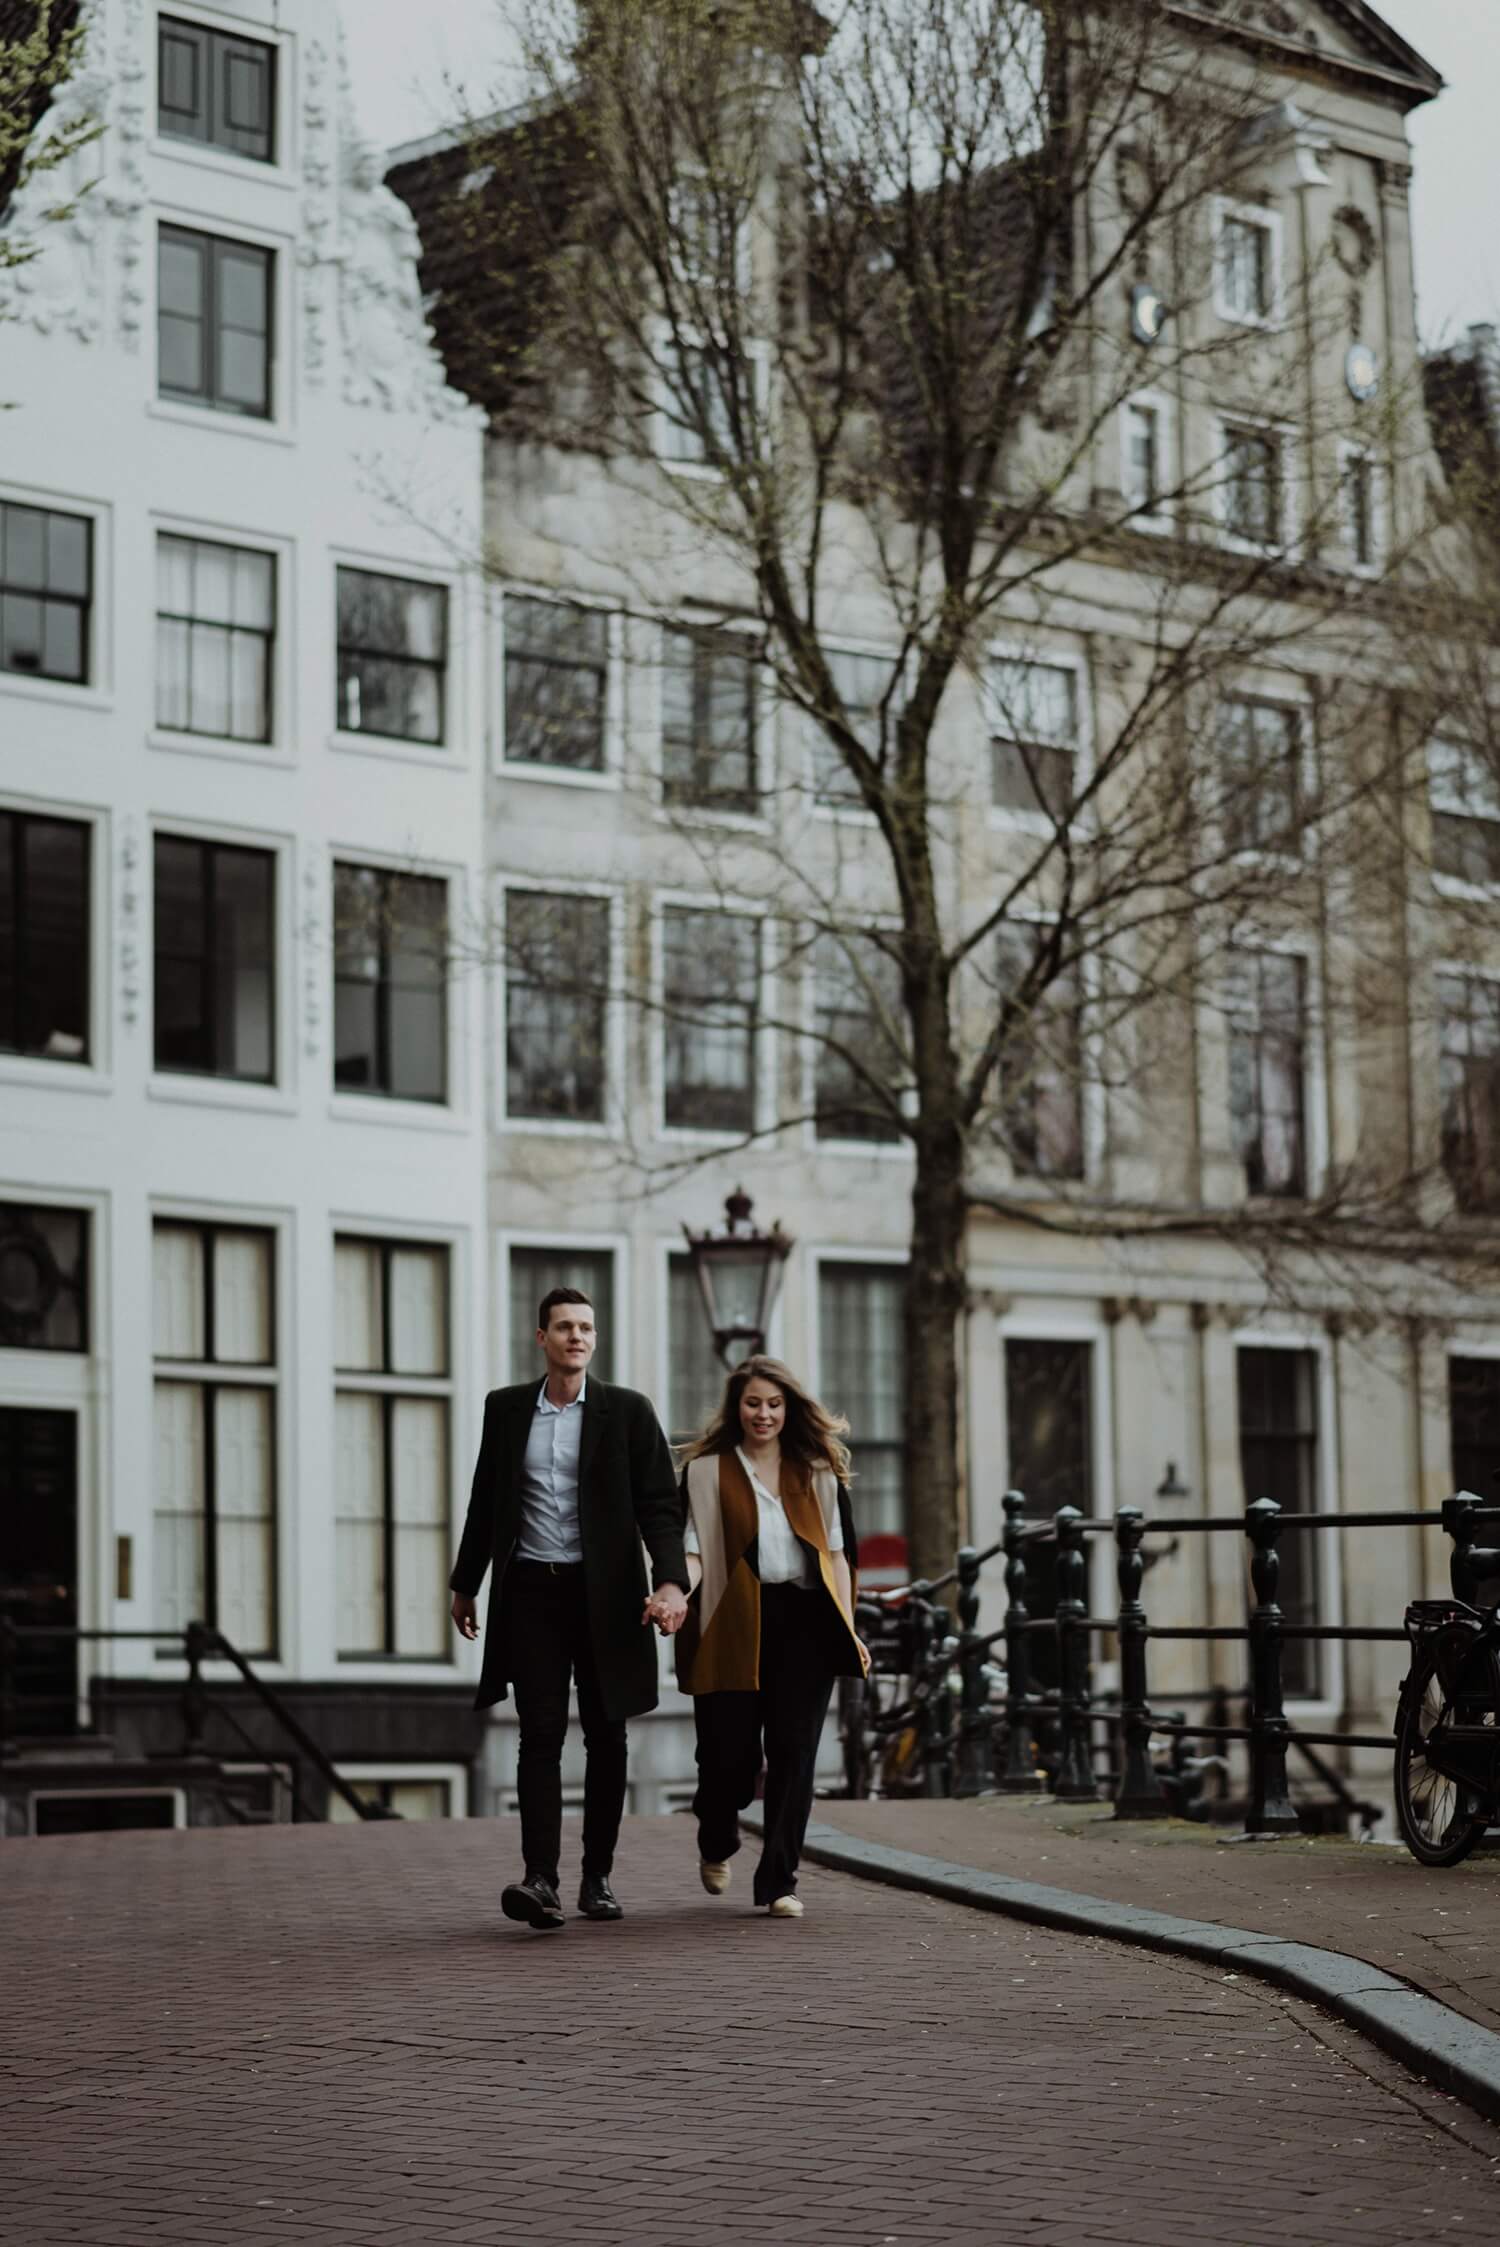 Amsterdam couple walking